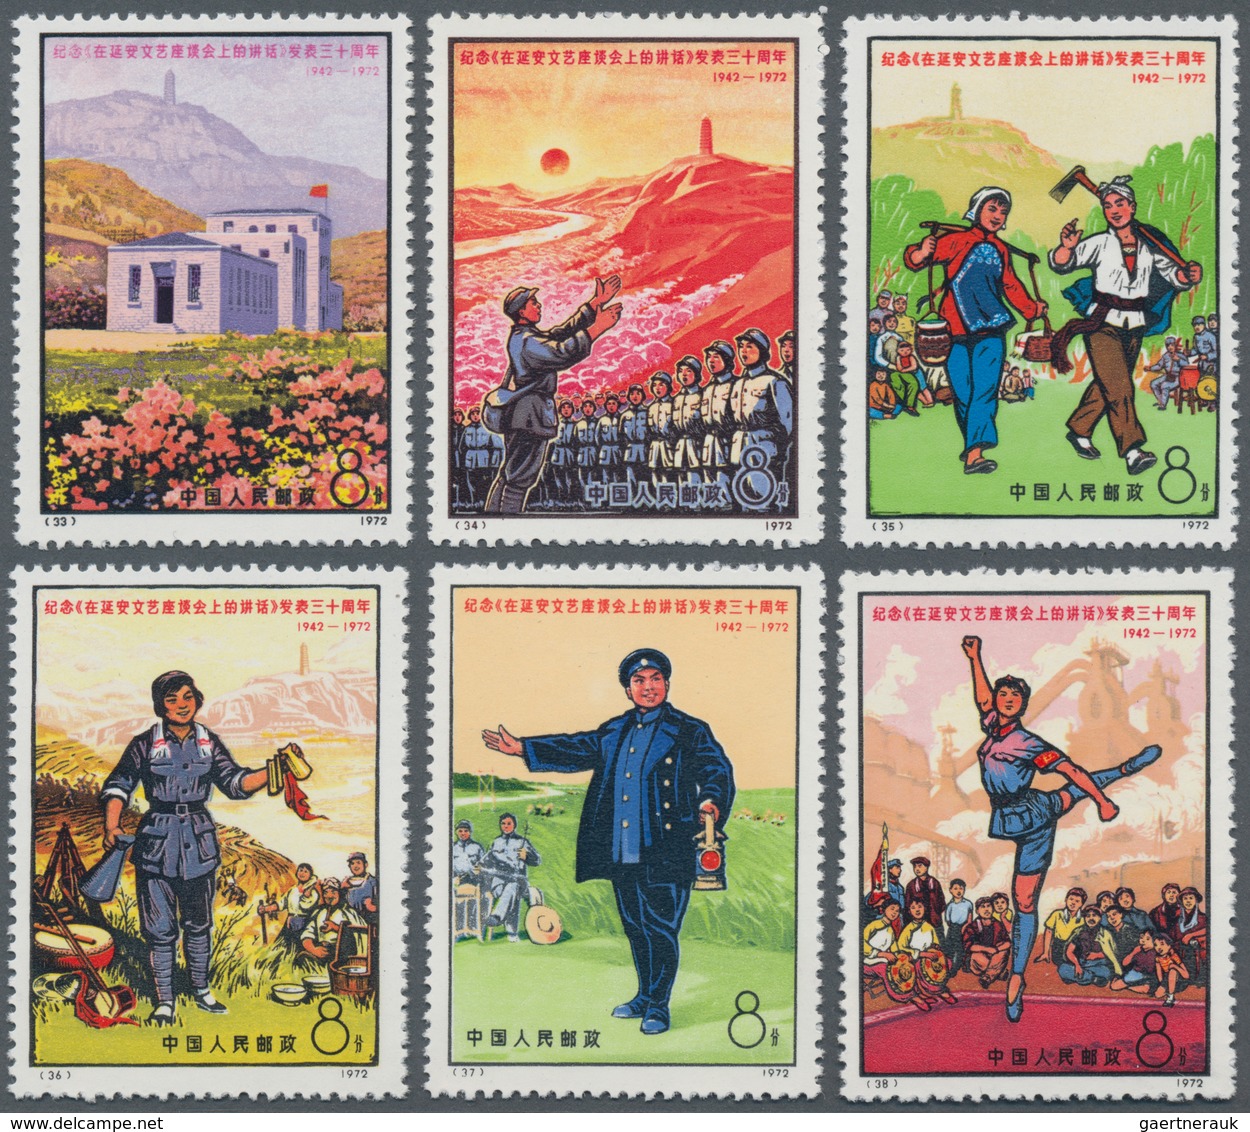 China - Volksrepublik: 1972, five issues MNH resp. unused no gum as issued: Yenan Talks (N33-N38), P